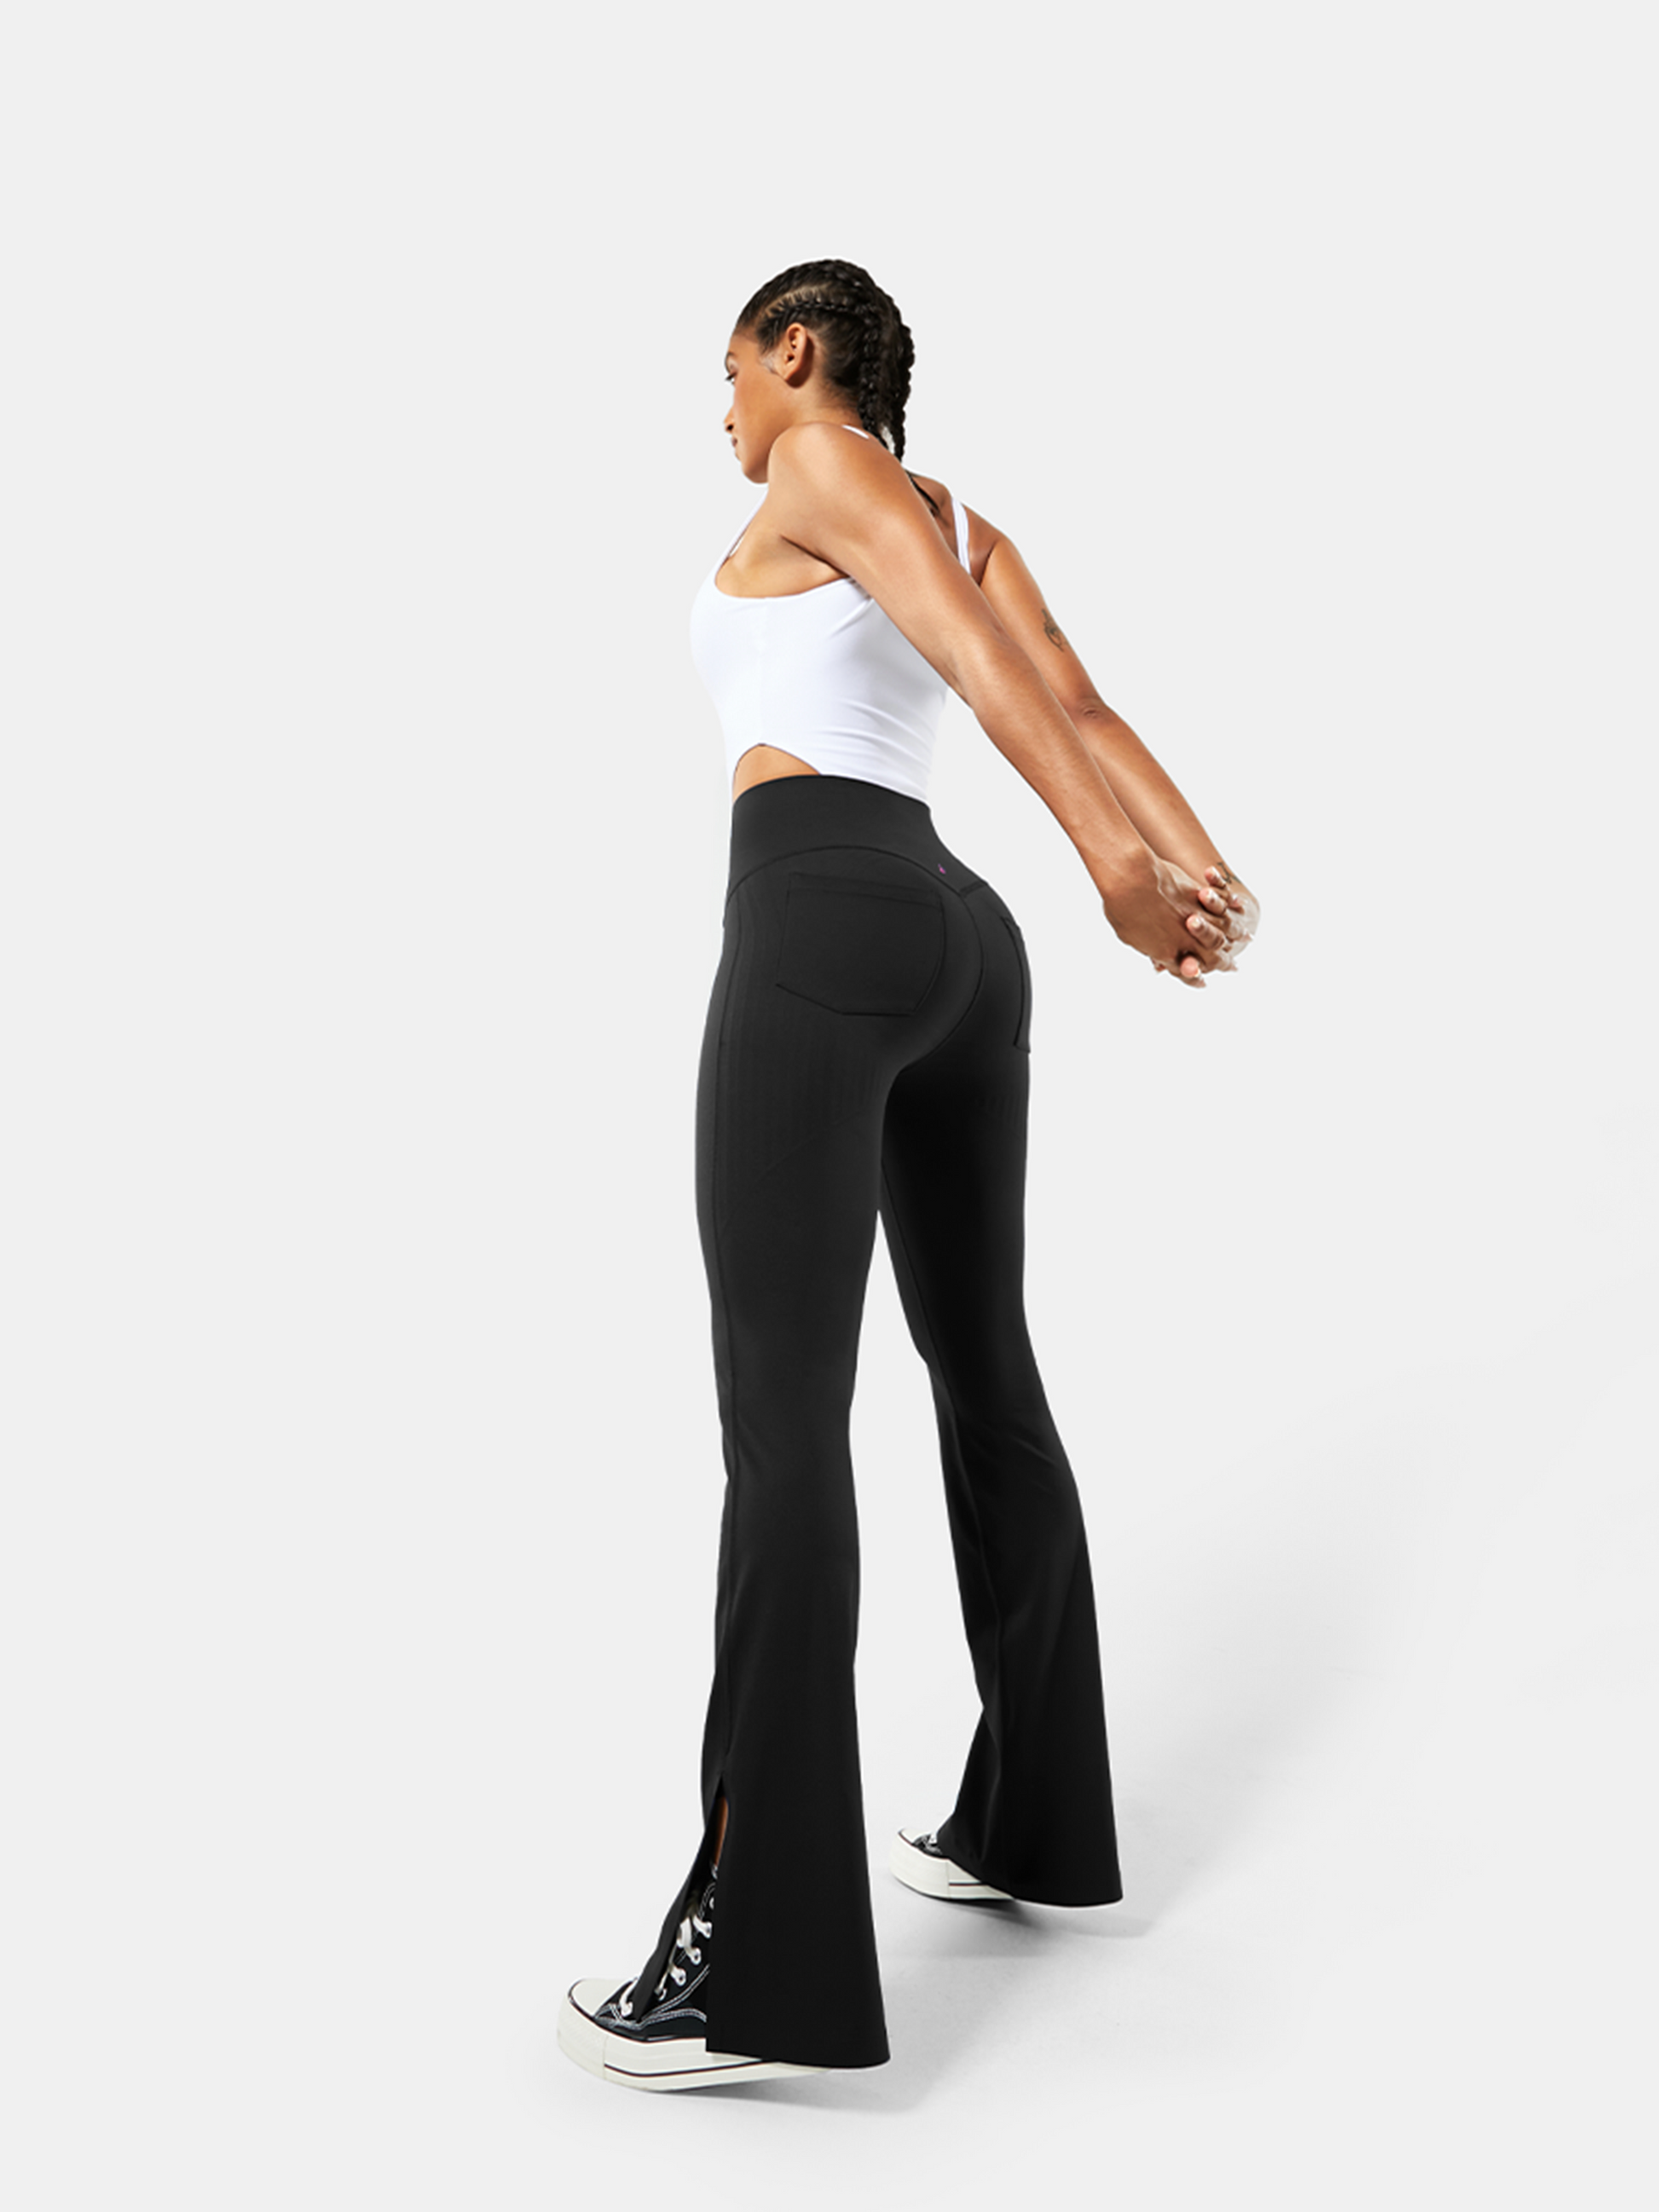 Popfit Leggings Size M Black Pop Fit 2218-34 Activewear Comfort Pockets Mesh